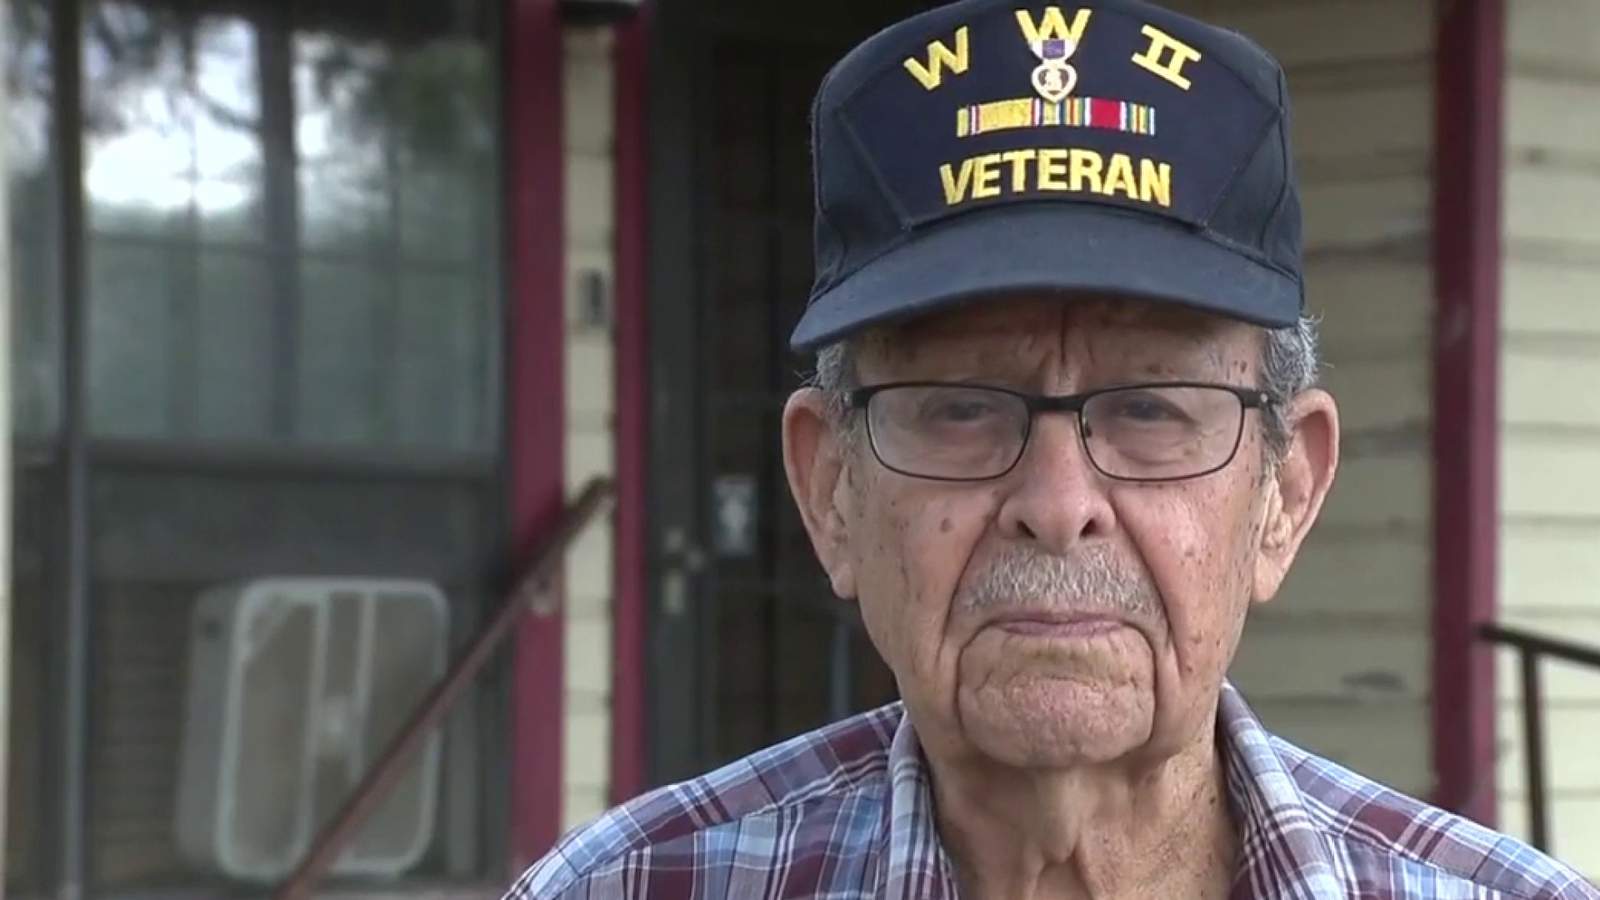 Efforts underway to help 94-year-old war hero return to his home